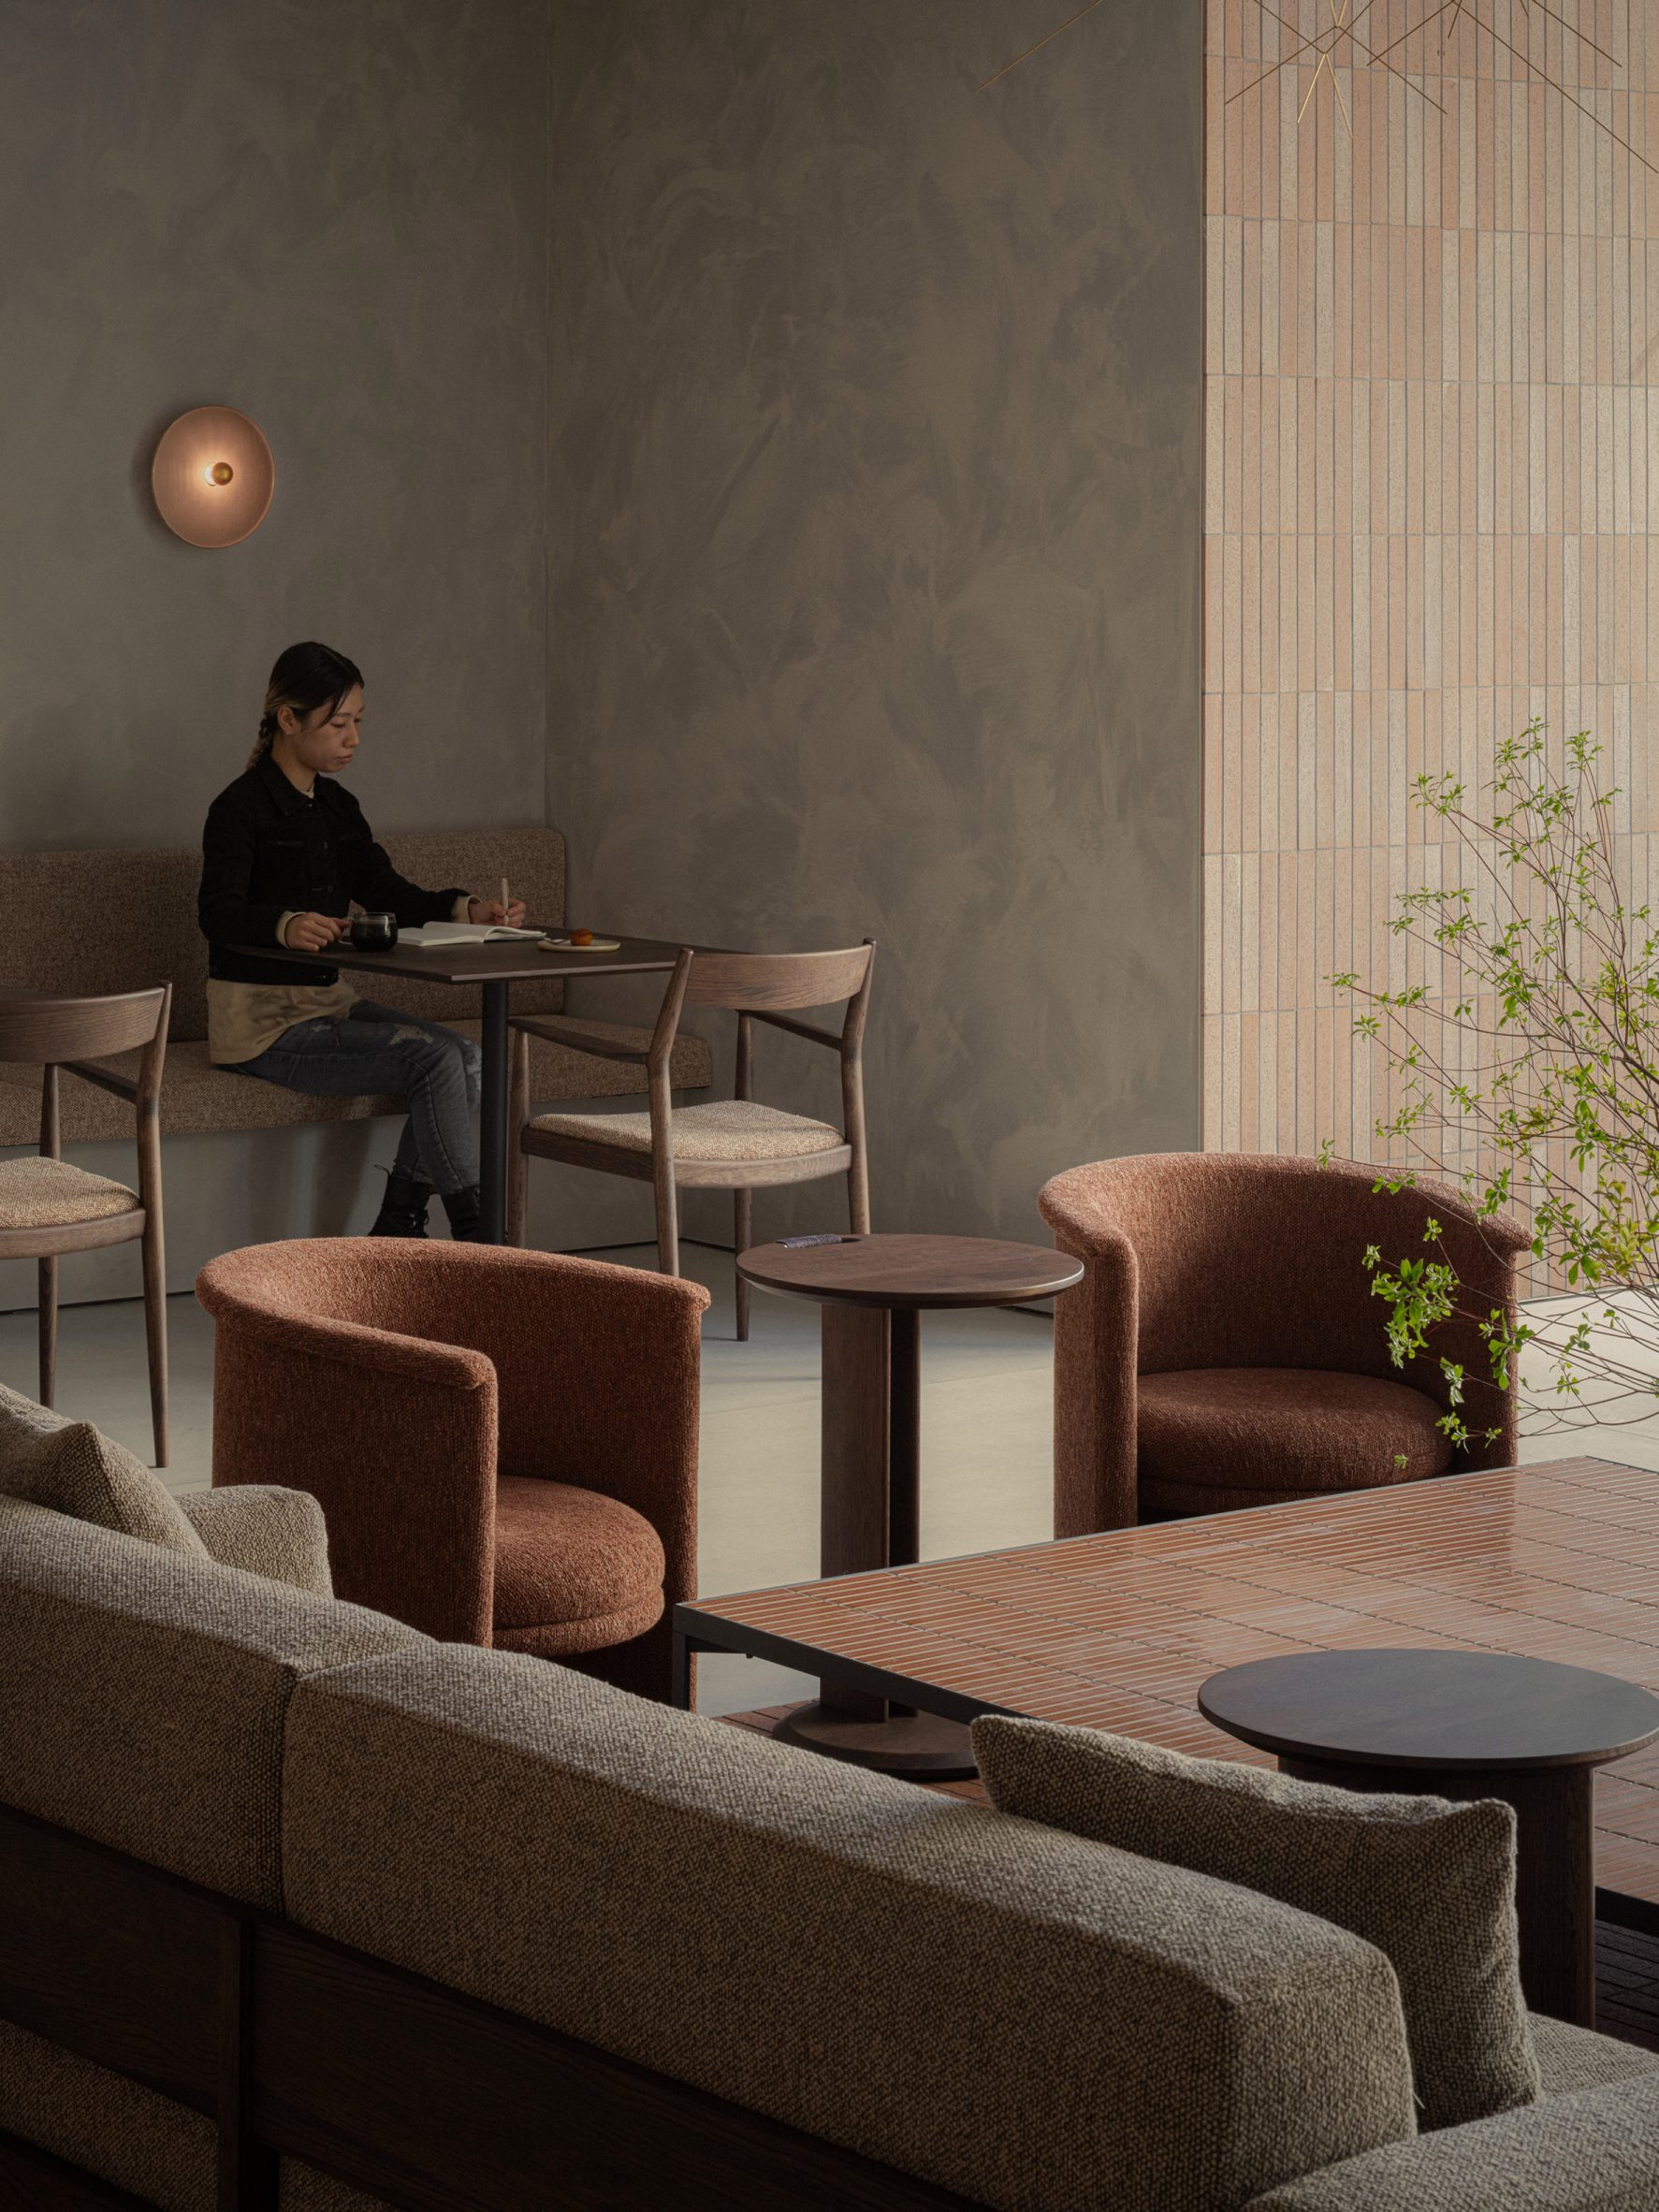 Glazed tiles in cafe by Keiji Ashizawa Design